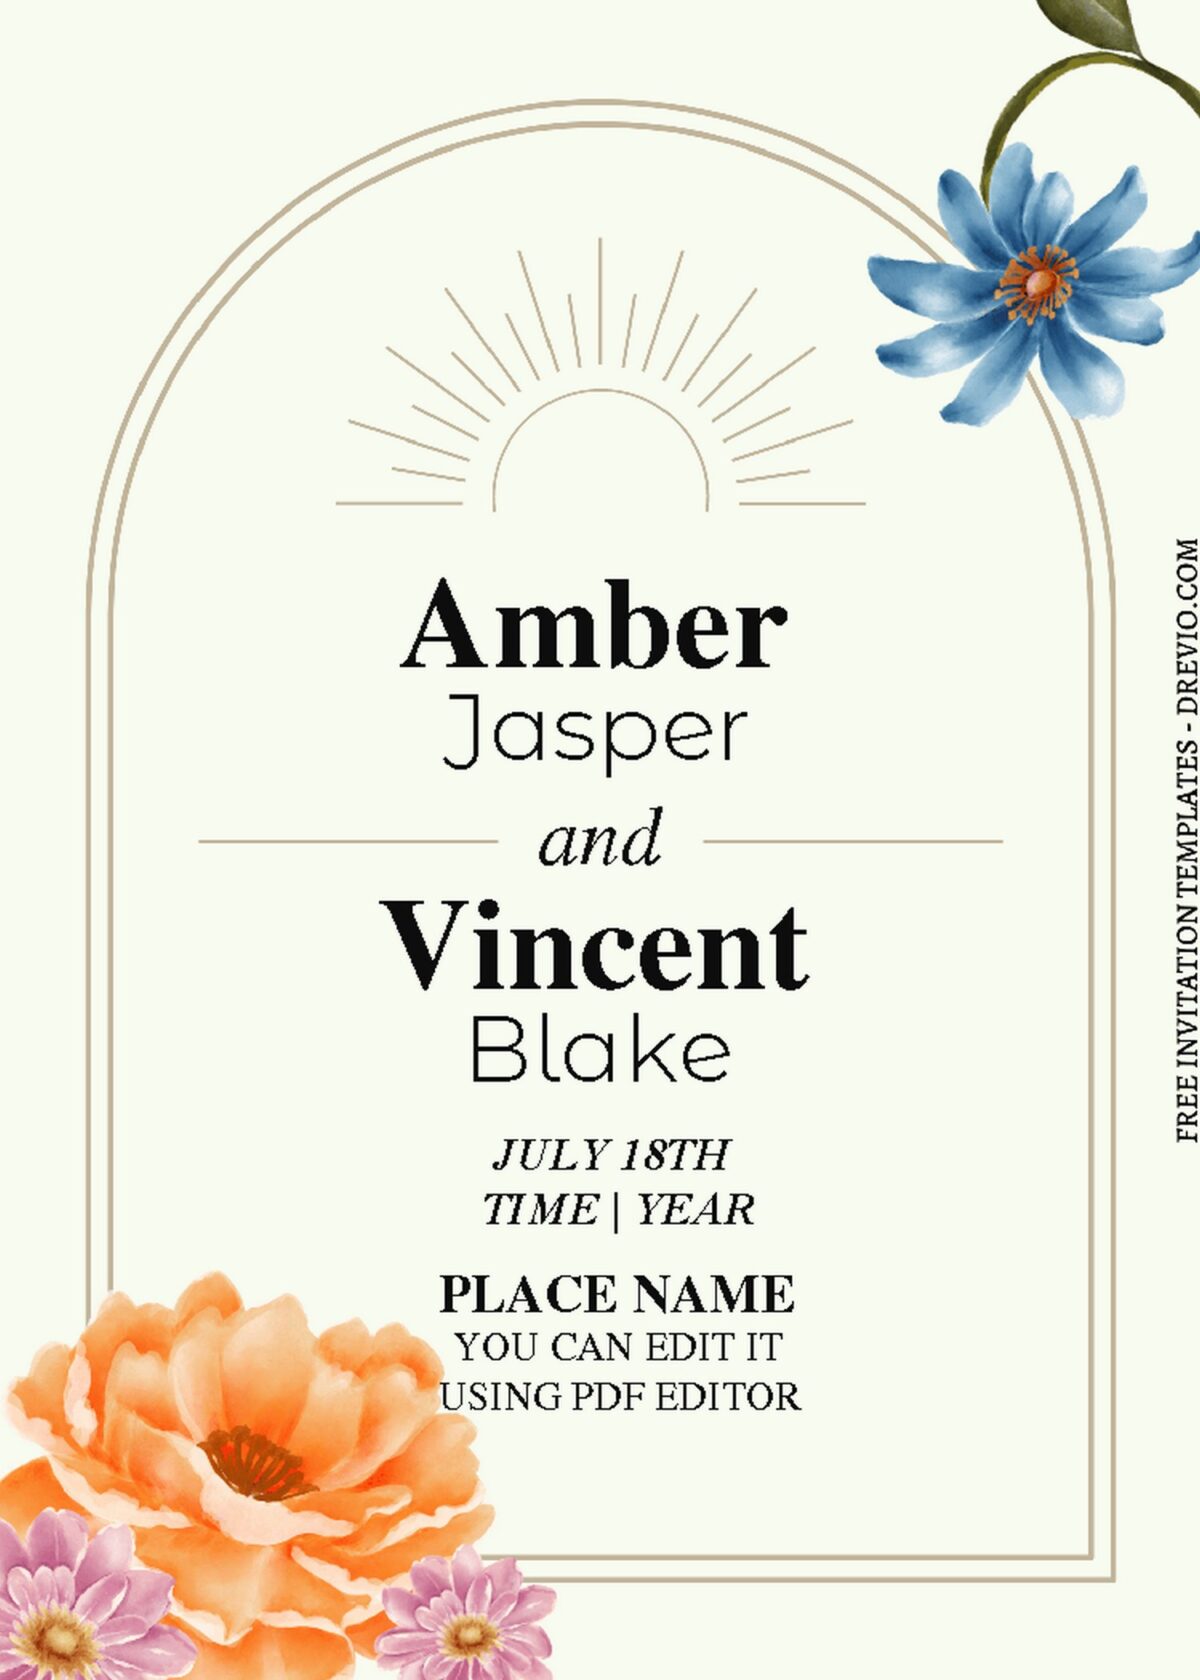 (Free Editable PDF) Bold & Vivid Wedding Invitation Templates with elegant arch weddng frame